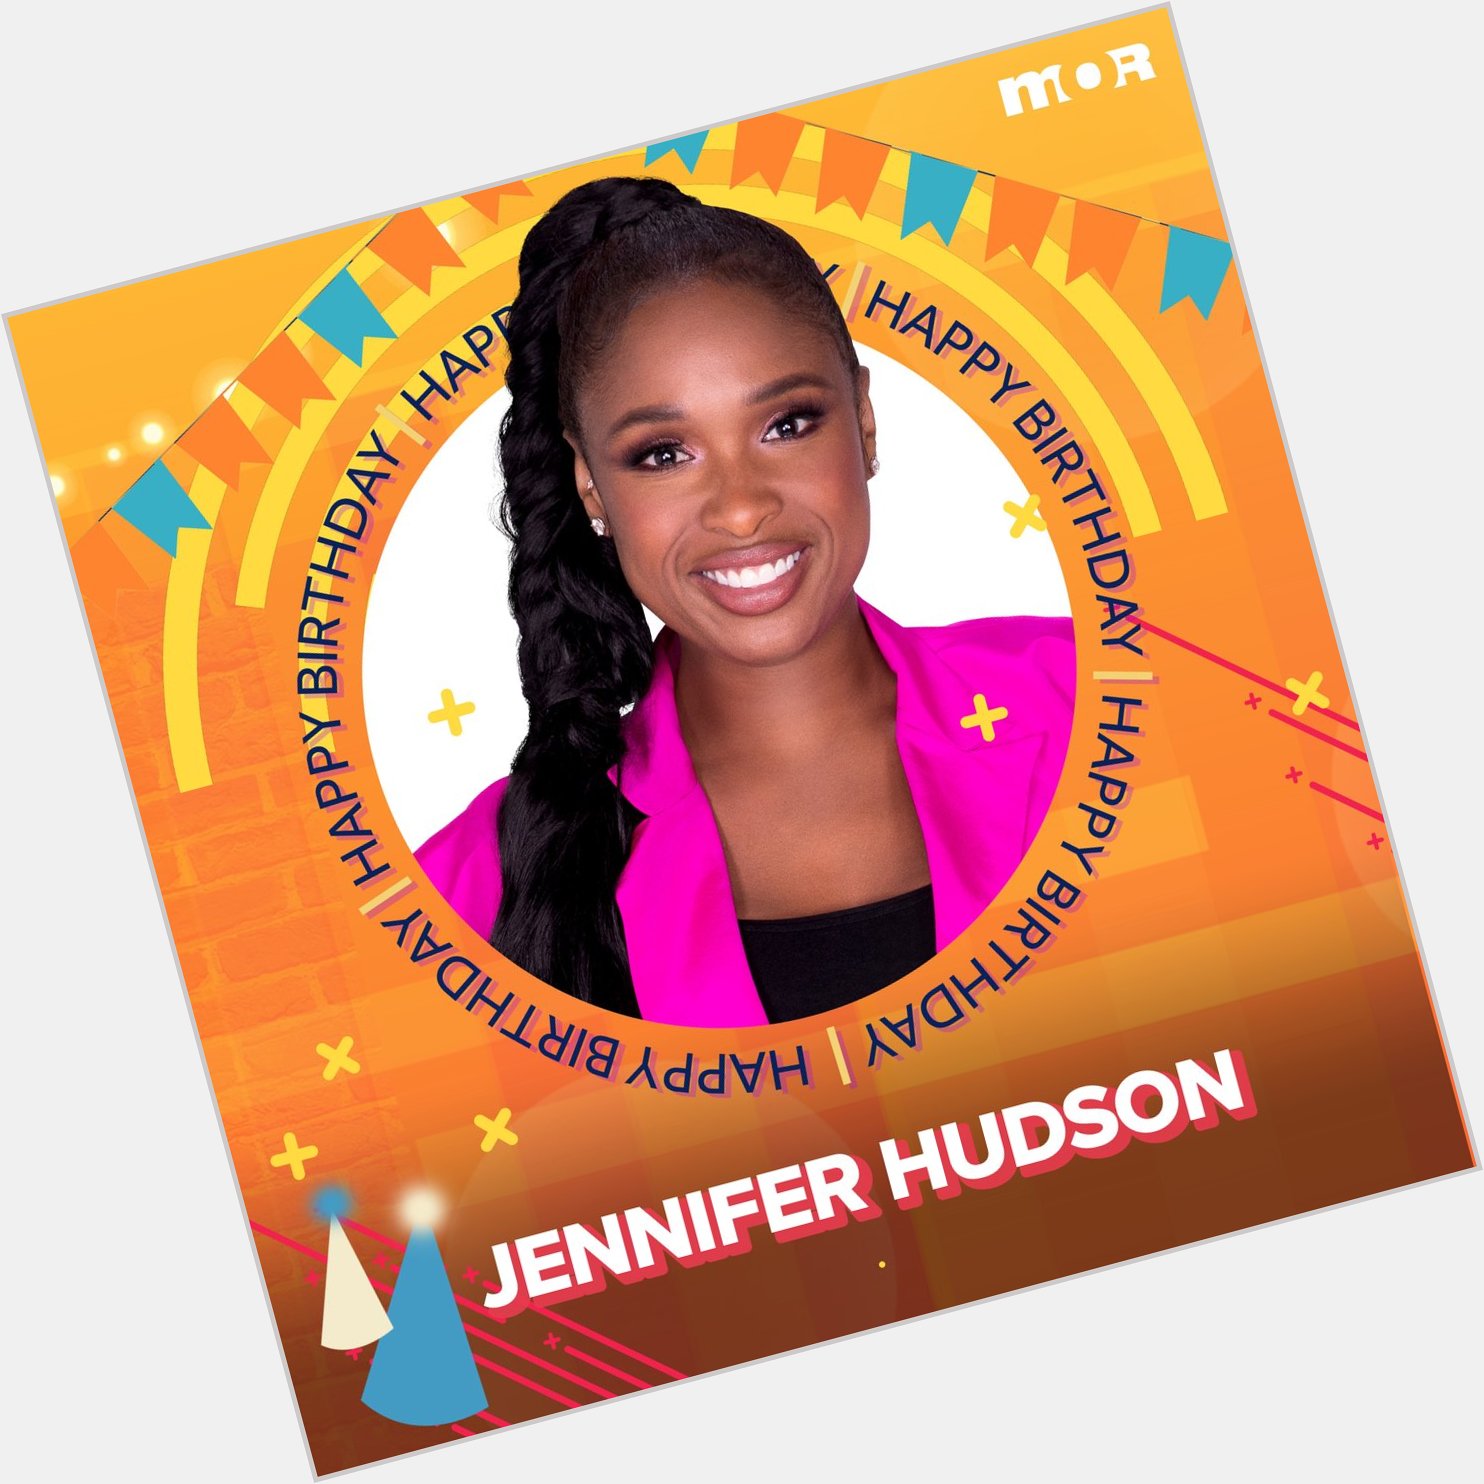 Happy Birthday Jennifer Hudson Watch JHud weekday mornings at 9 on Tampa Bay\s MOR 